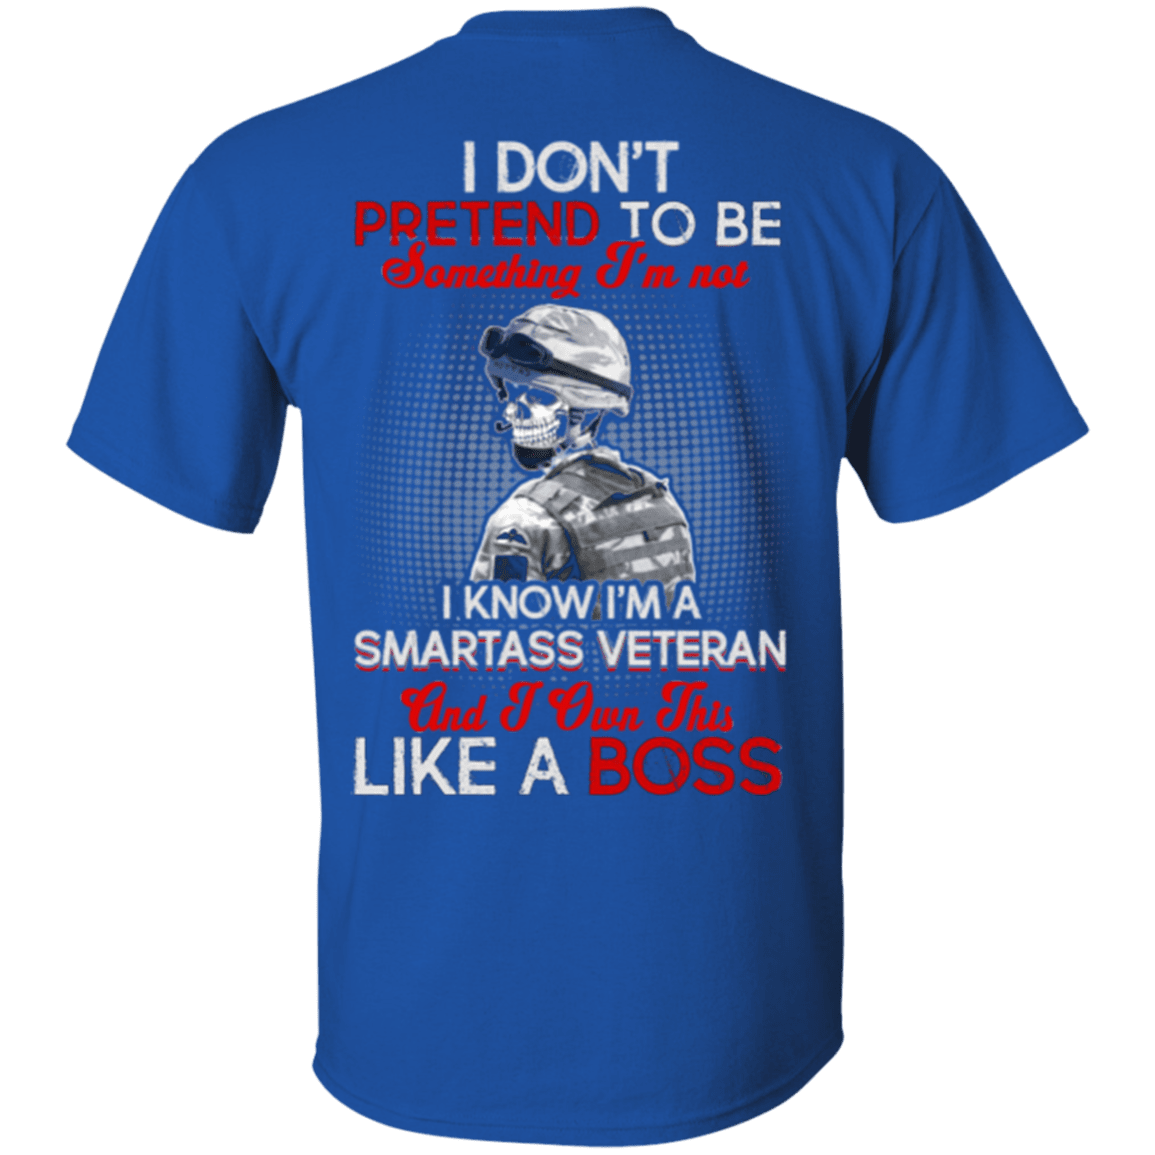 Military T-Shirt "I Know I'm A Smartass Veteran Like a Boss"-TShirt-General-Veterans Nation